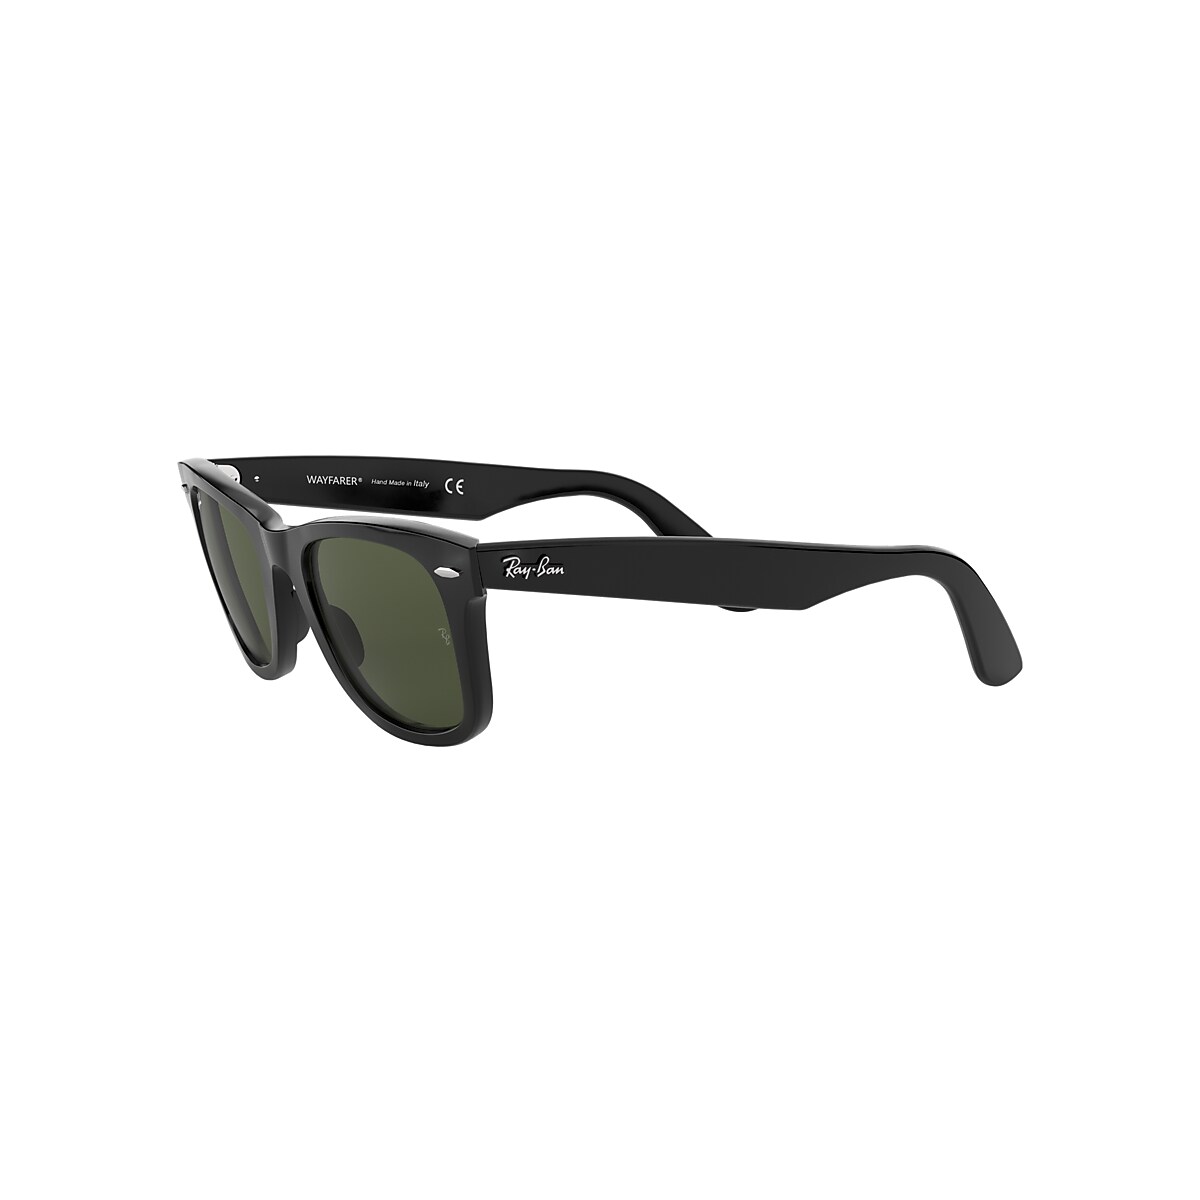 Fiasko Lingvistik snyde Original Wayfarer Classic Sunglasses in Black and Green | Ray-Ban®